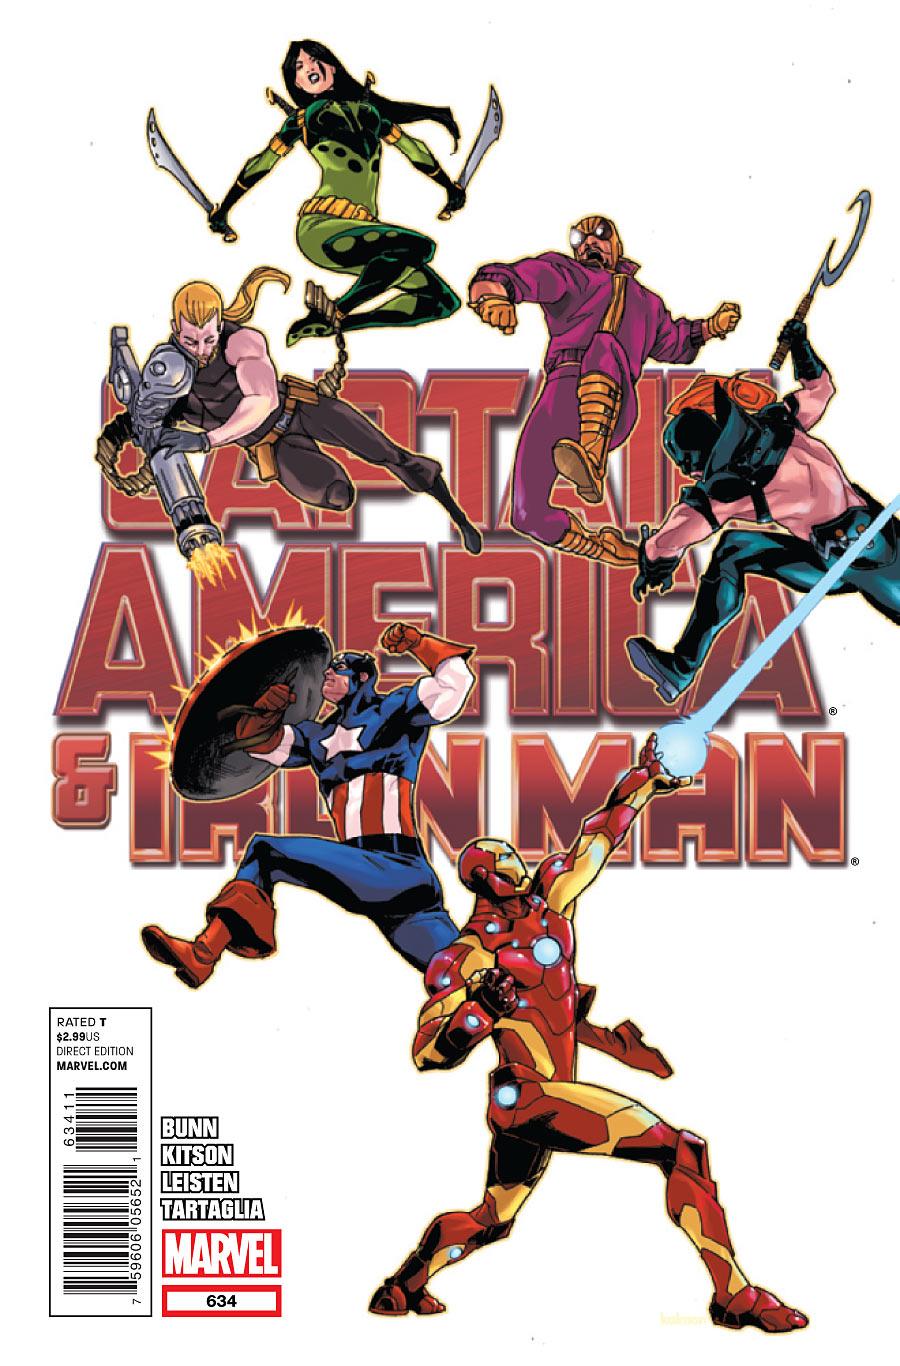 Captain America and Iron Man Vol. 1 #634